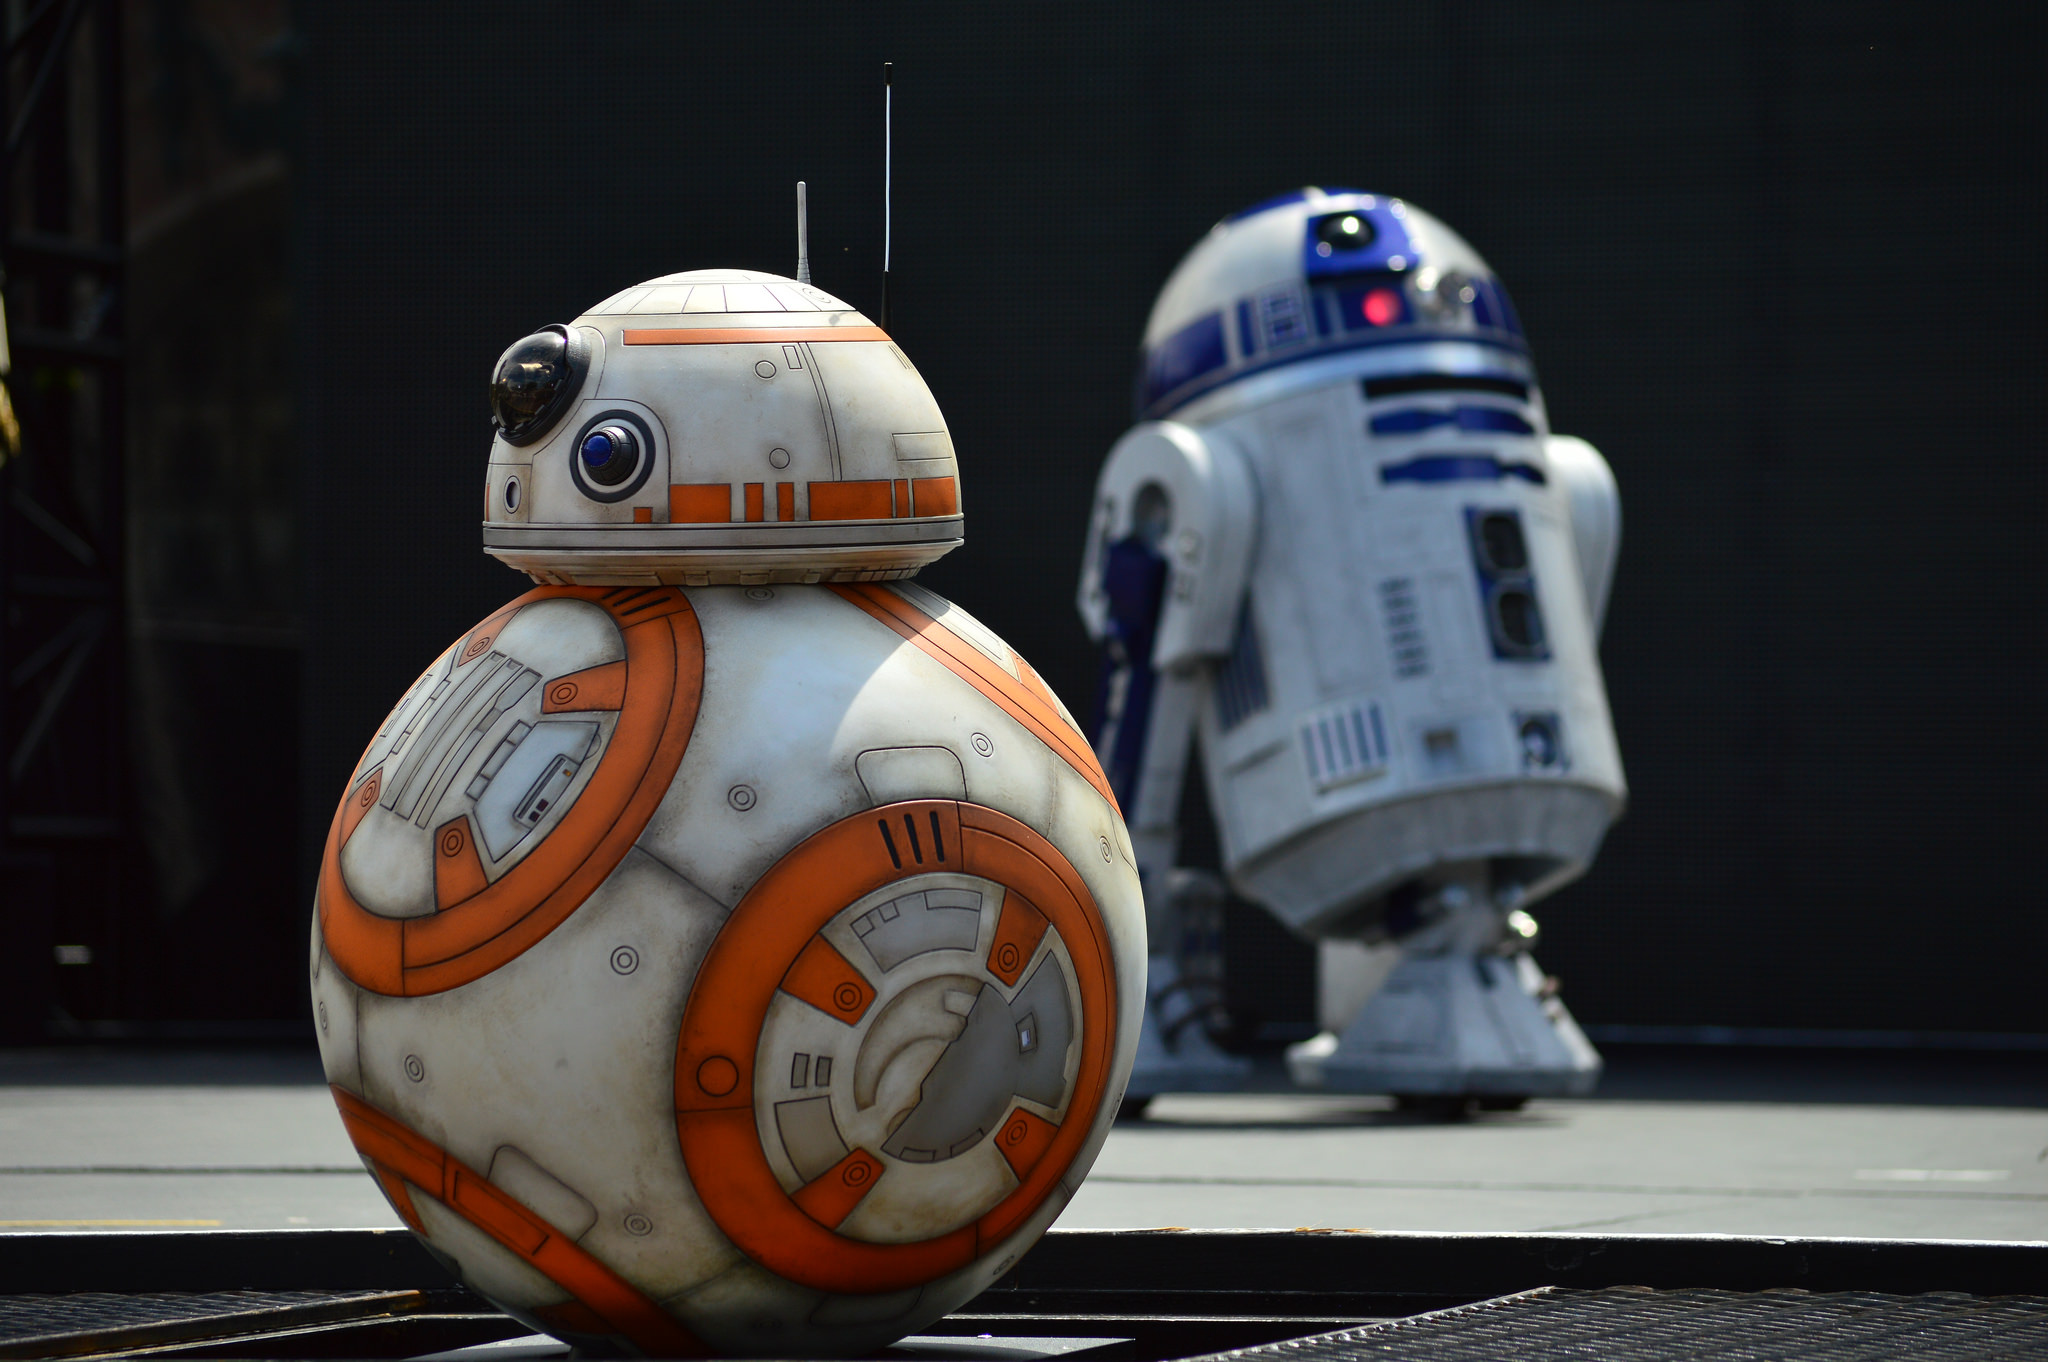 NEW 2017 D23 Expo Walt Disney Imagineering WDI Star Wars R2-D2 Droid Pin LE 500